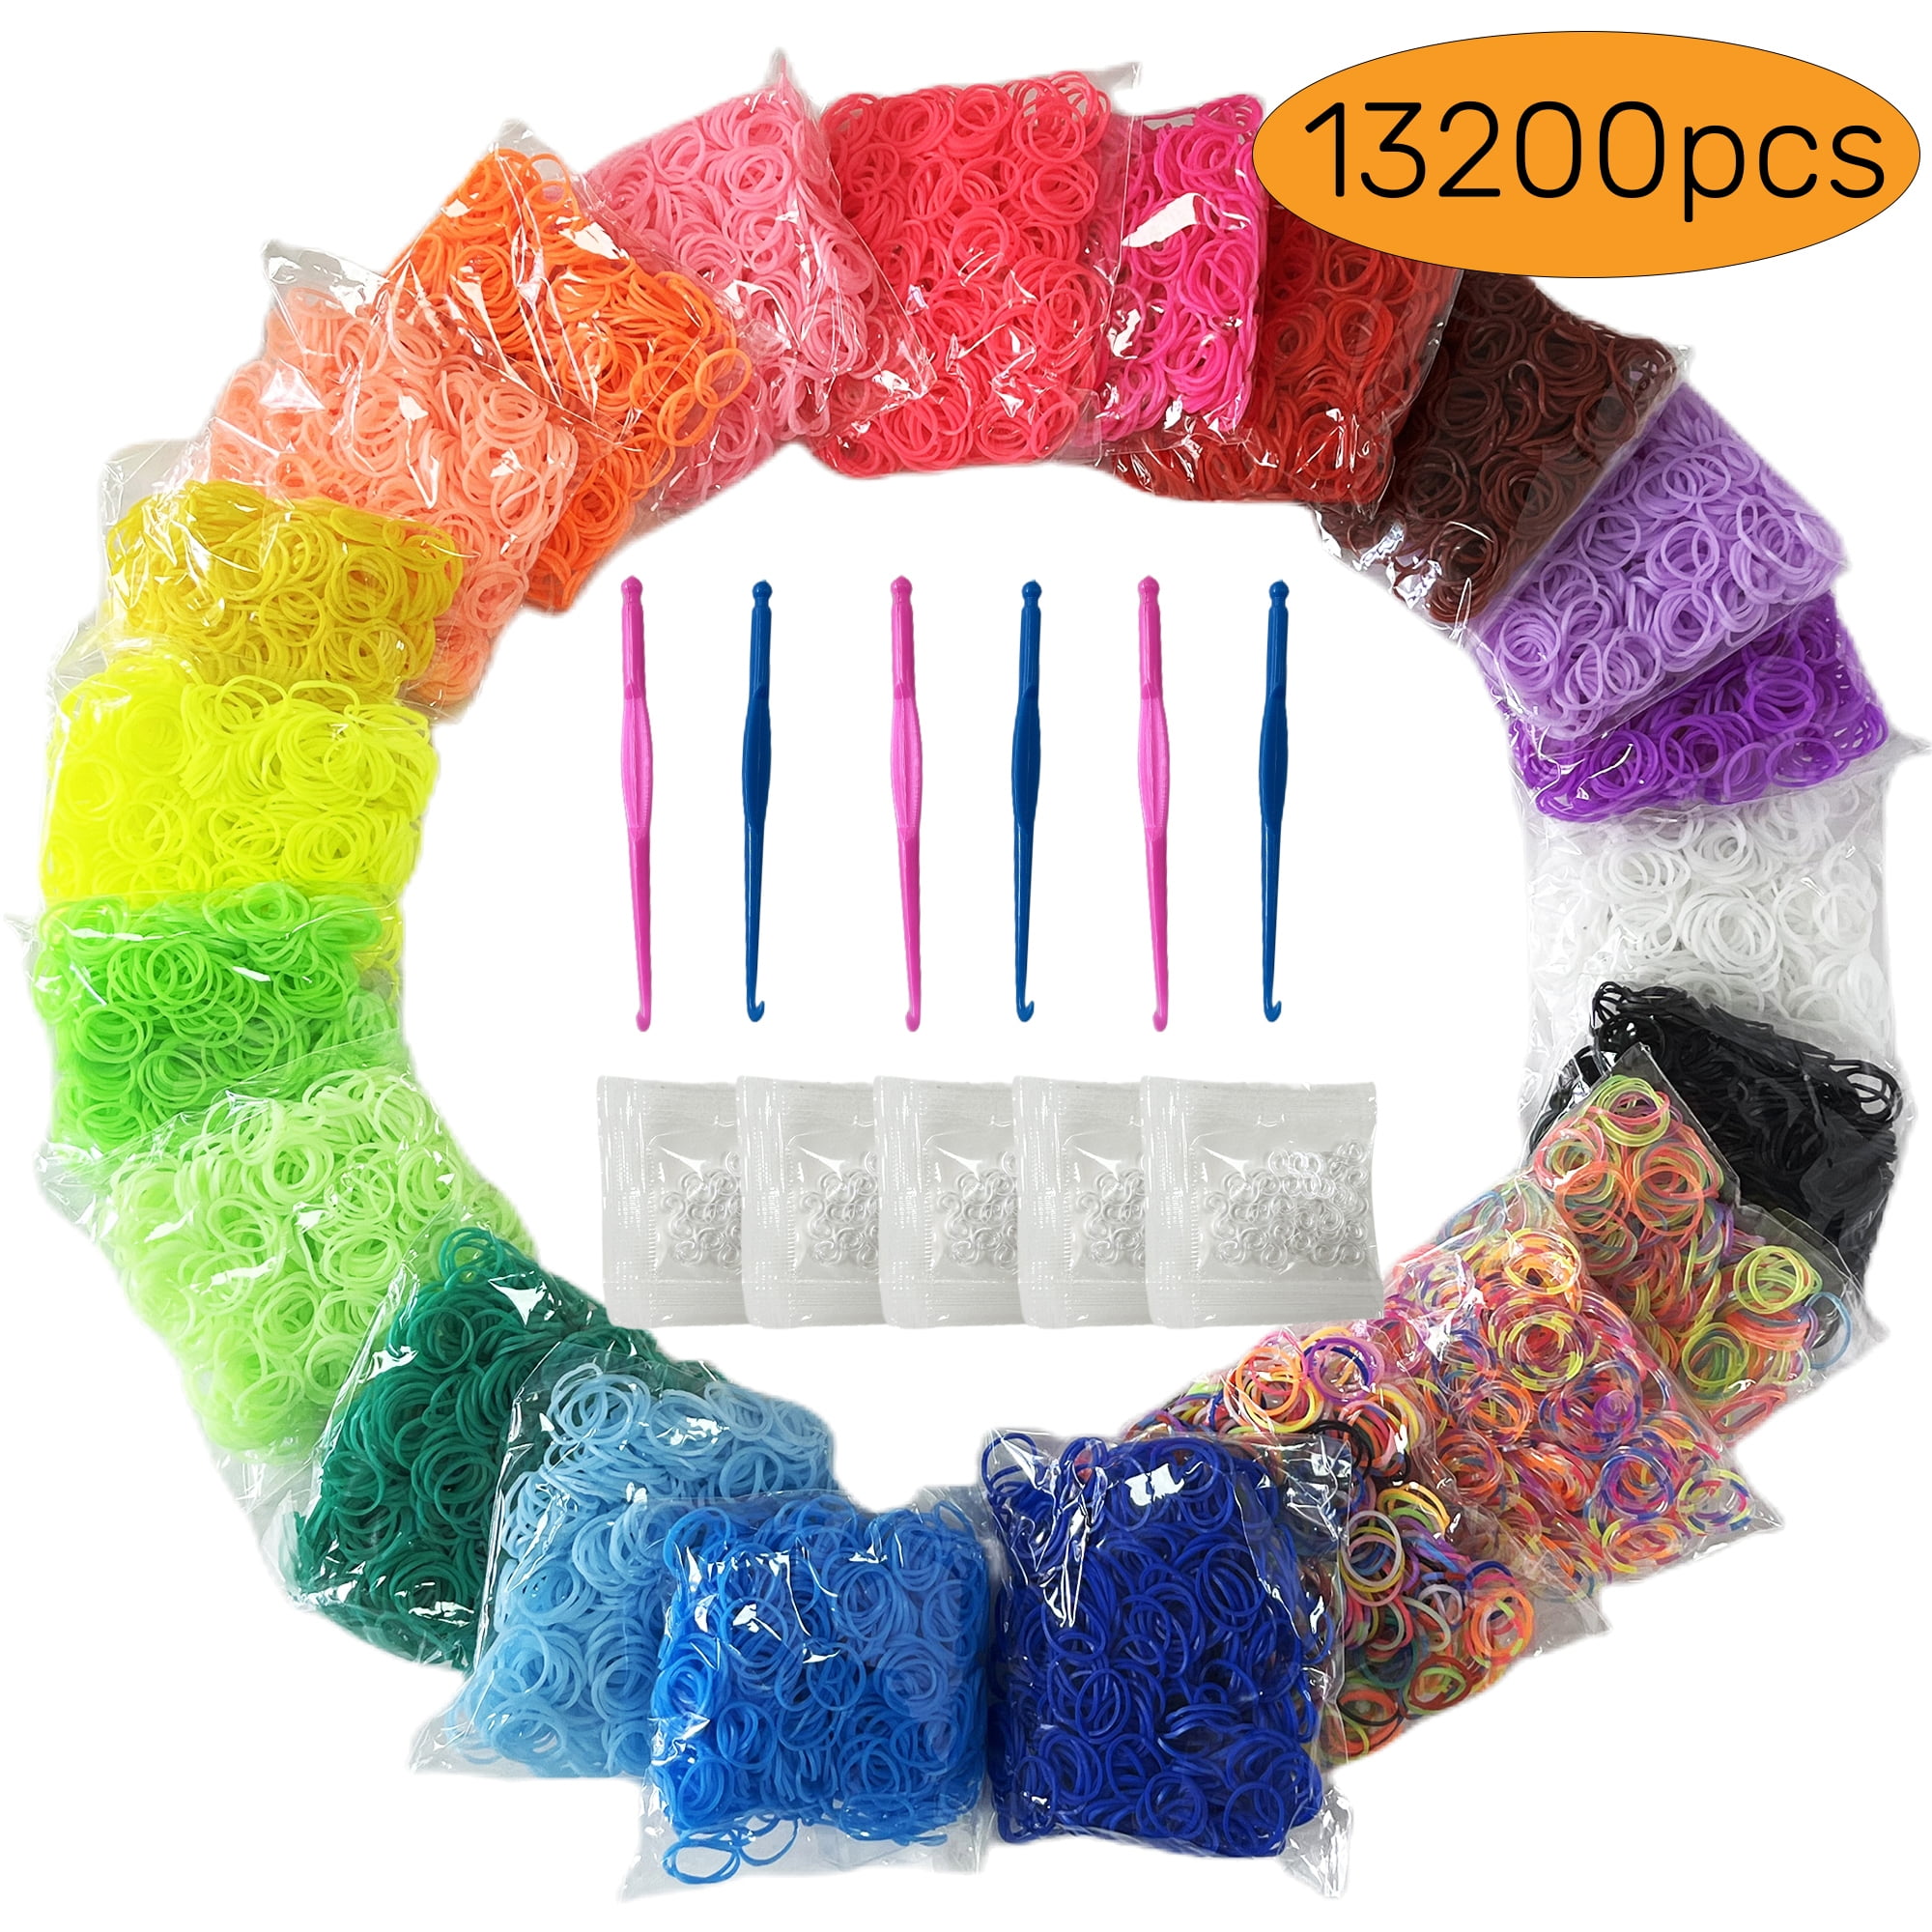 Butterfly 600pcs Diy toys for children rubber bands loom bracelet